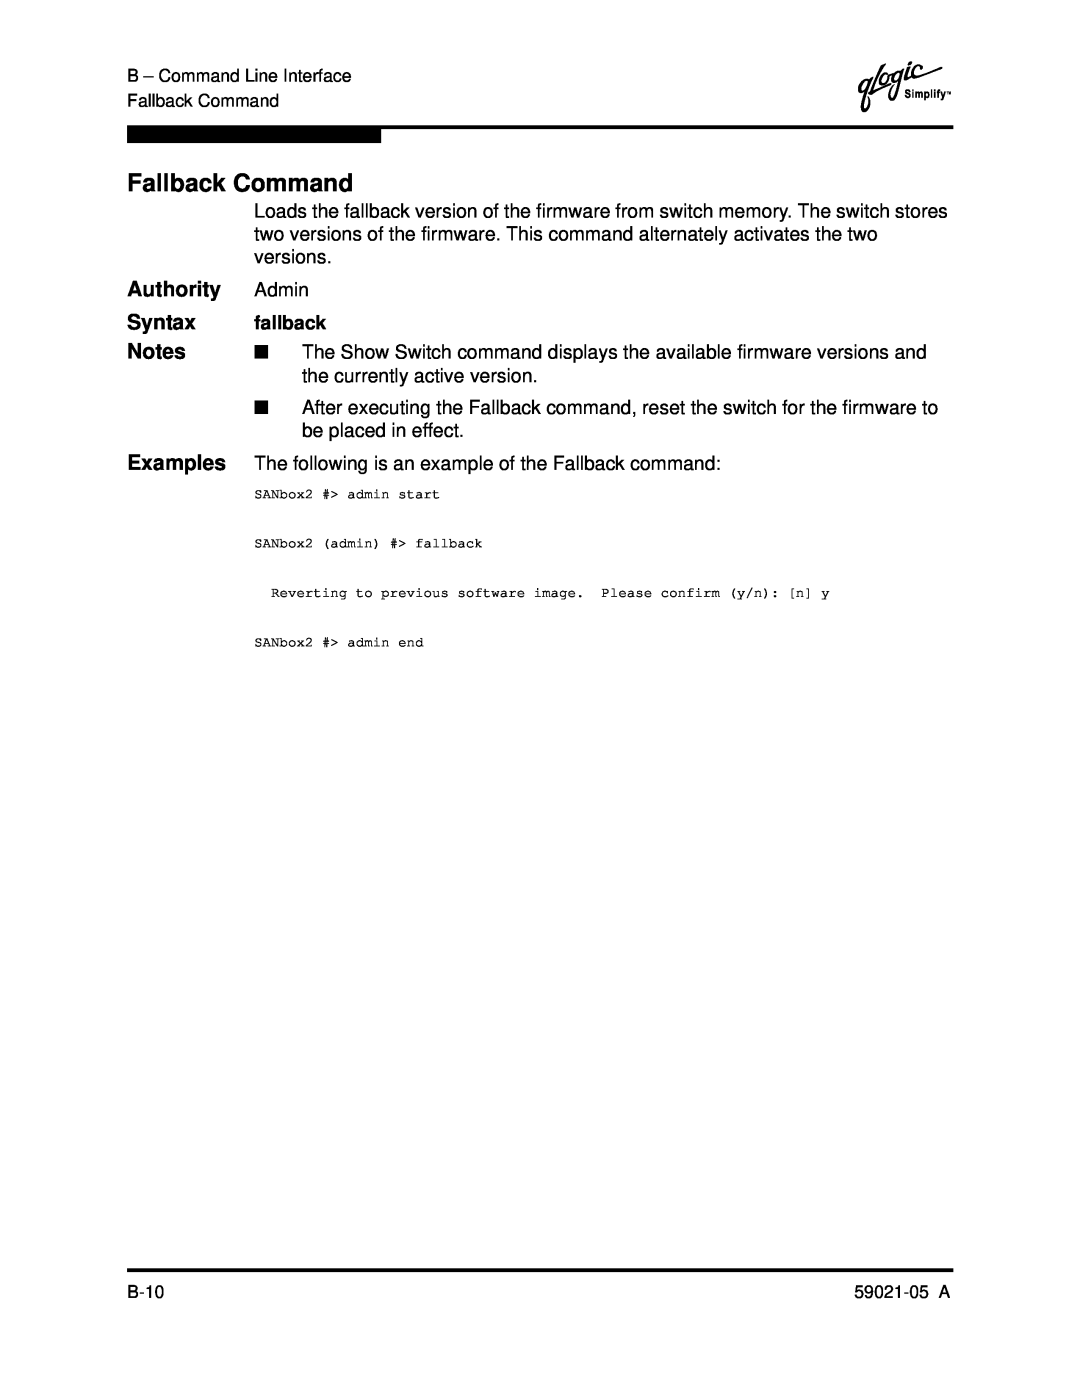 Q-Logic 59021-05 manual Fallback Command, Authority, Syntax, Examples, fallback 